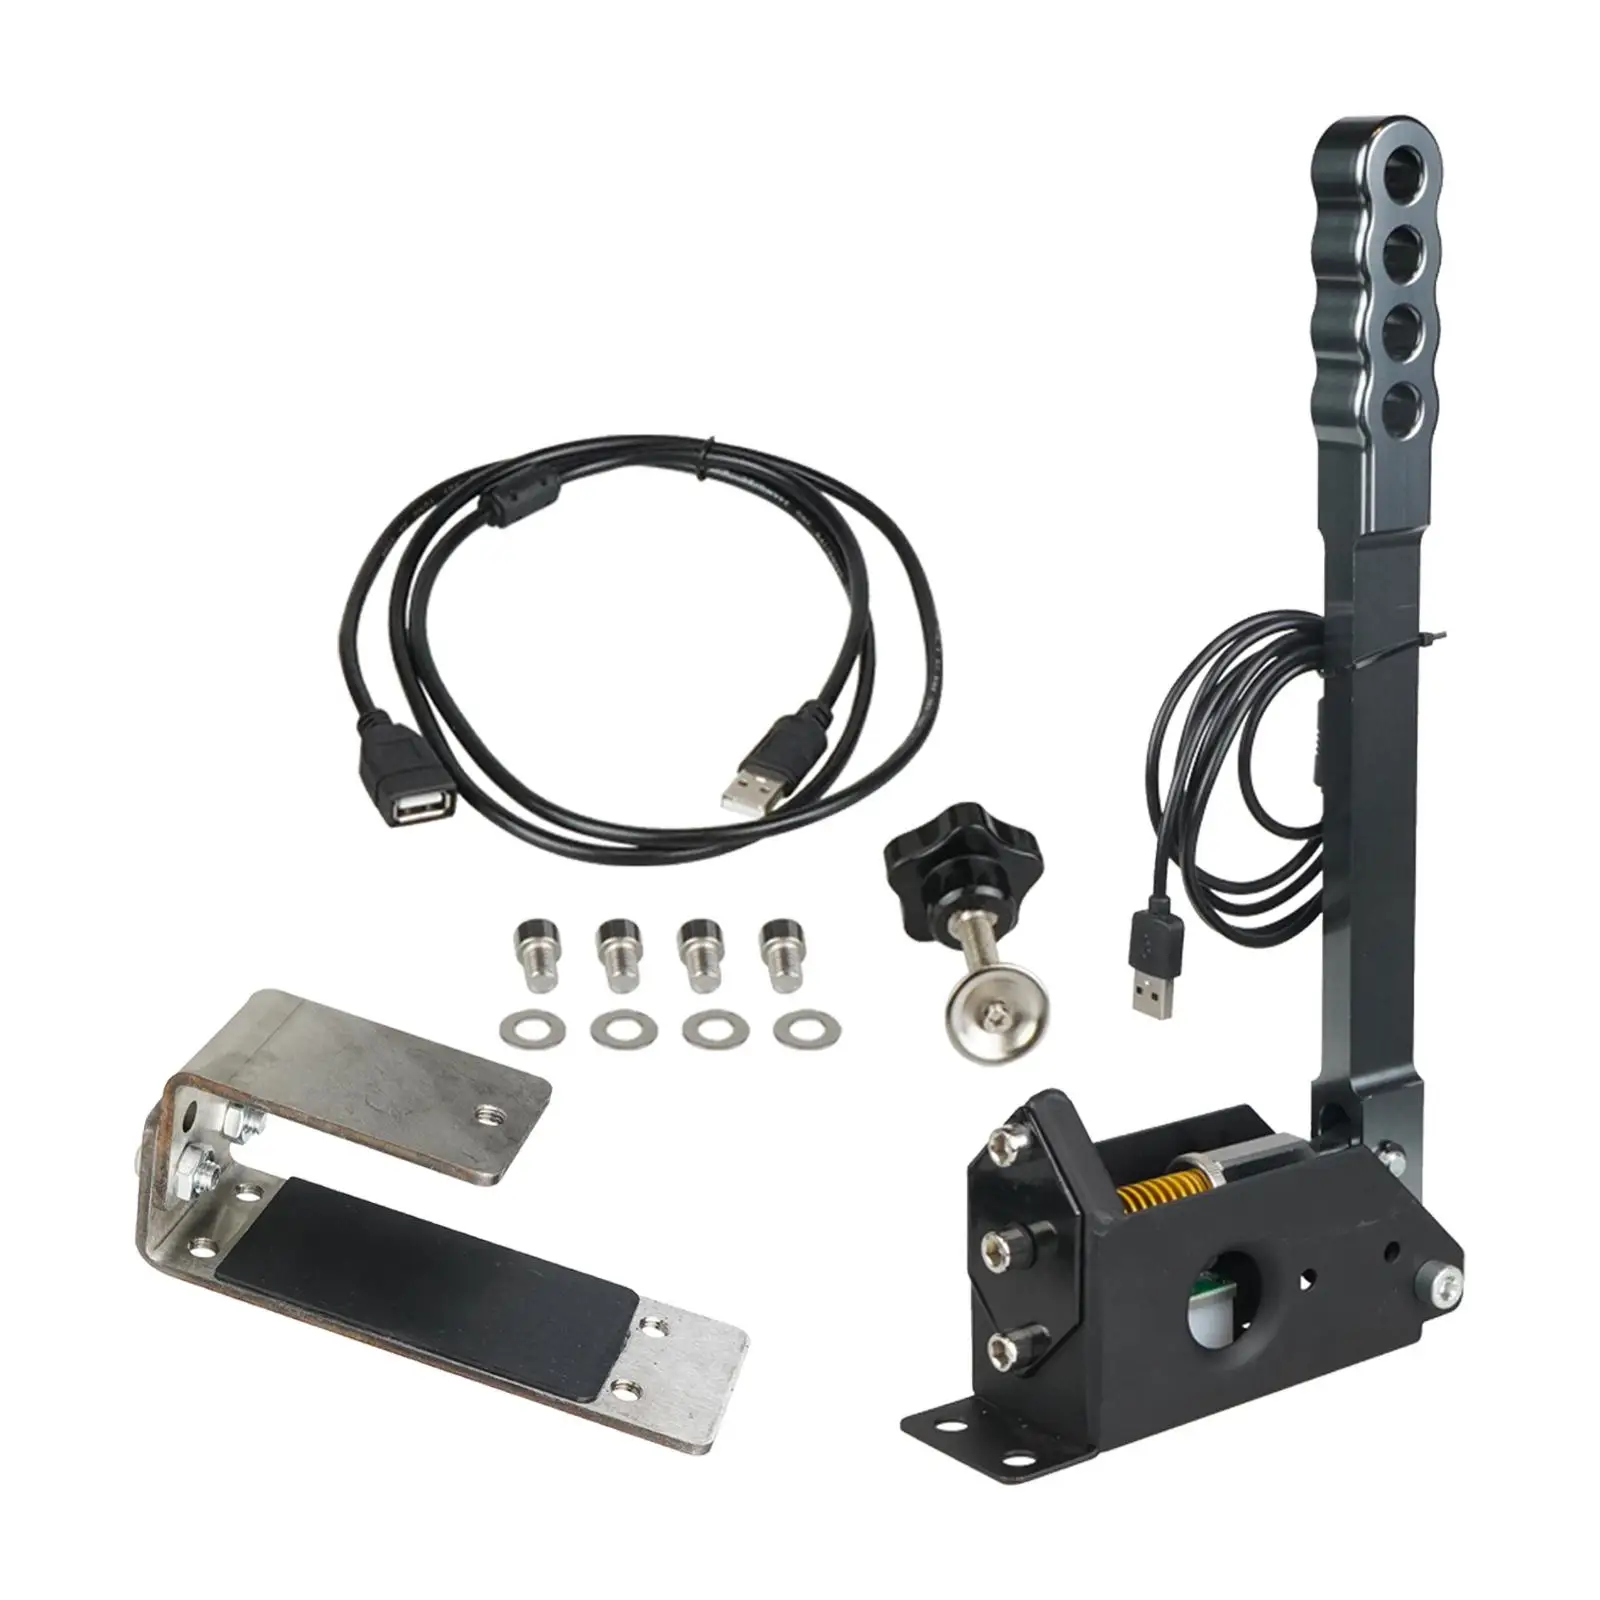 Handbrake Plug and Play 14 Bit Premium Adjustable with Fixing Clip Game Peripherals Handbrake for Logitech G29 Racing Games